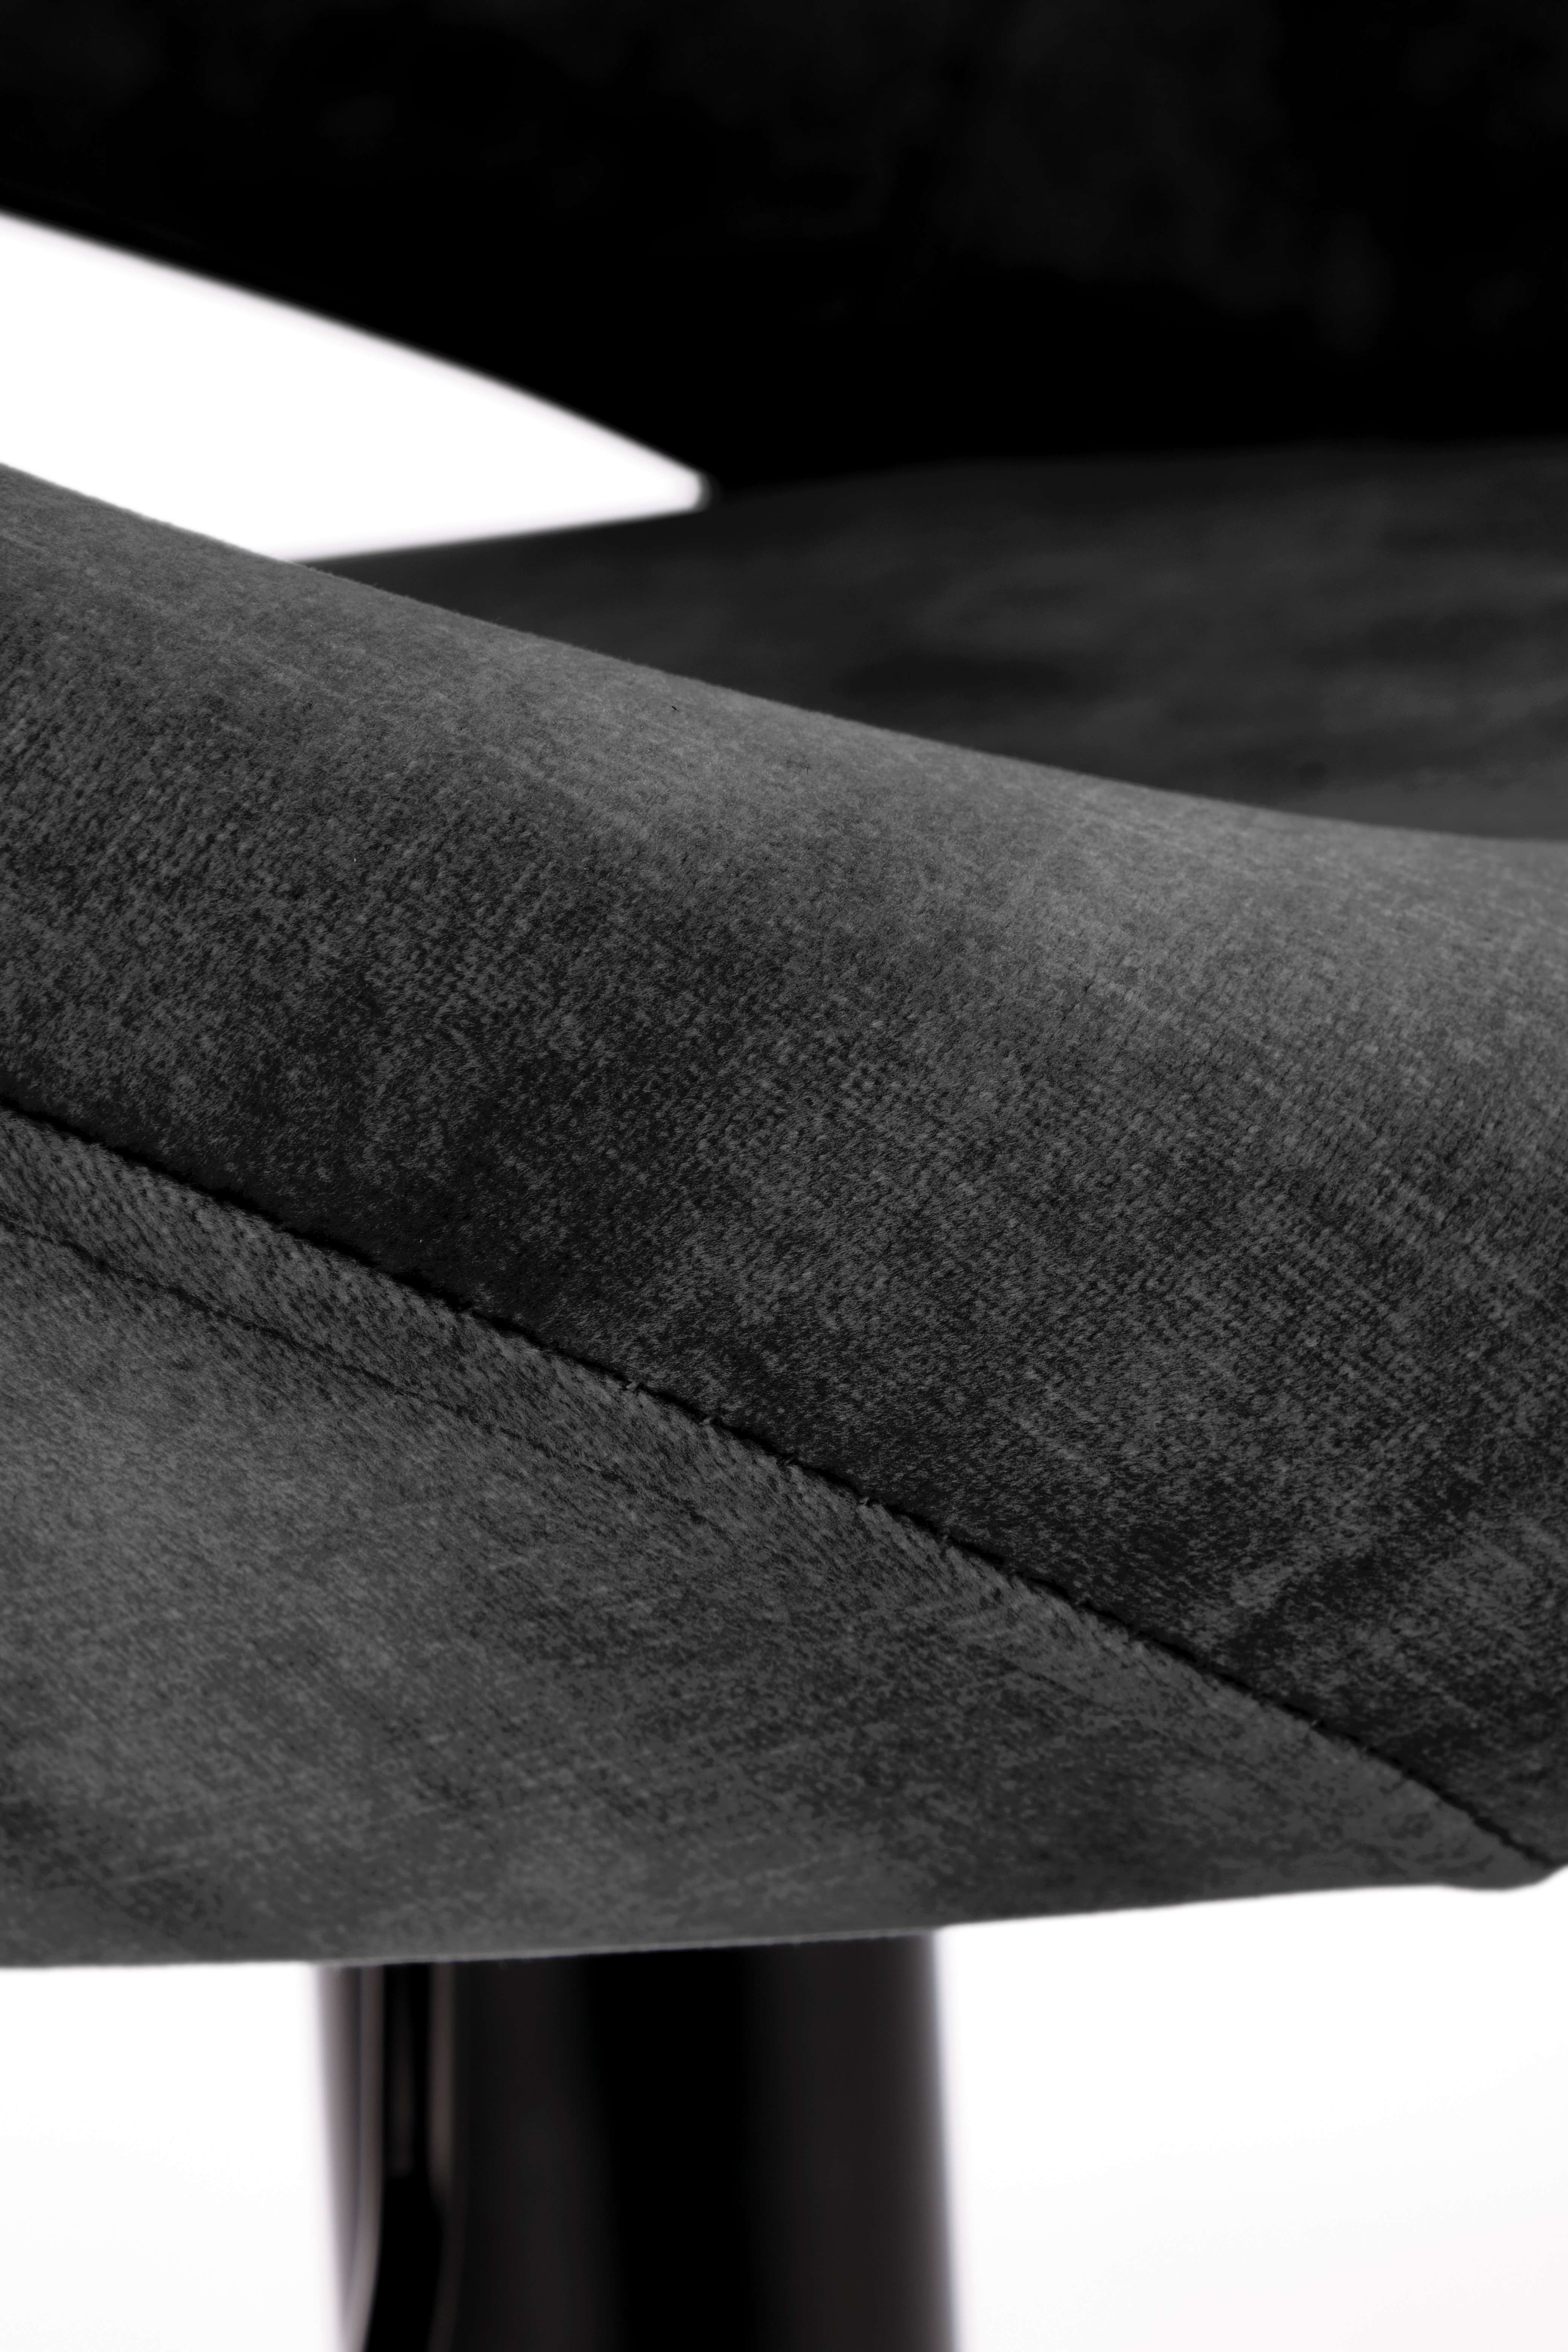 Scaun de bar H102 tapițat - negru h102 Barová židle Černý